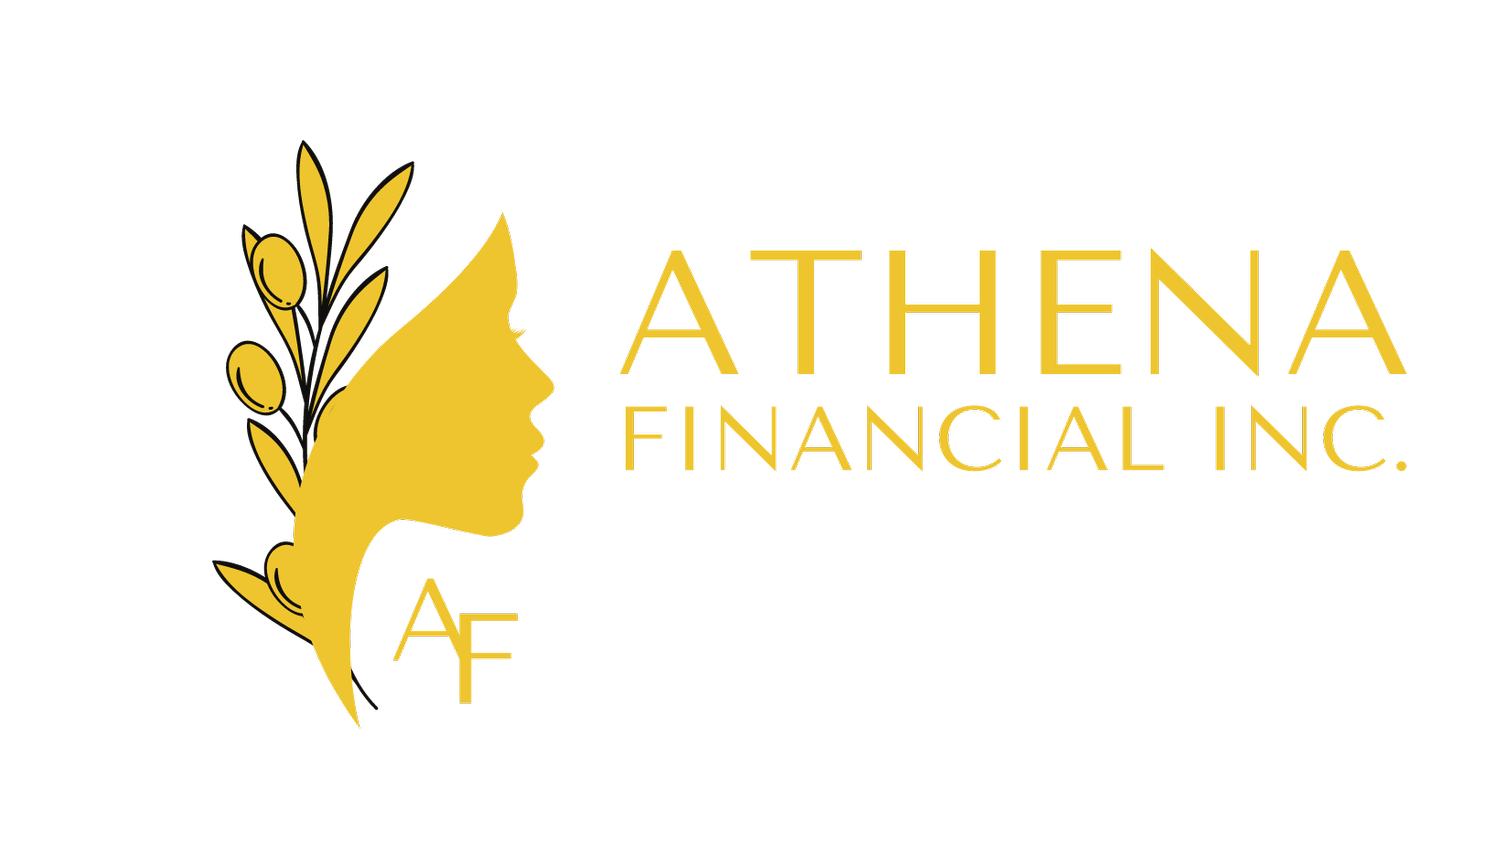 Athena Financial Inc